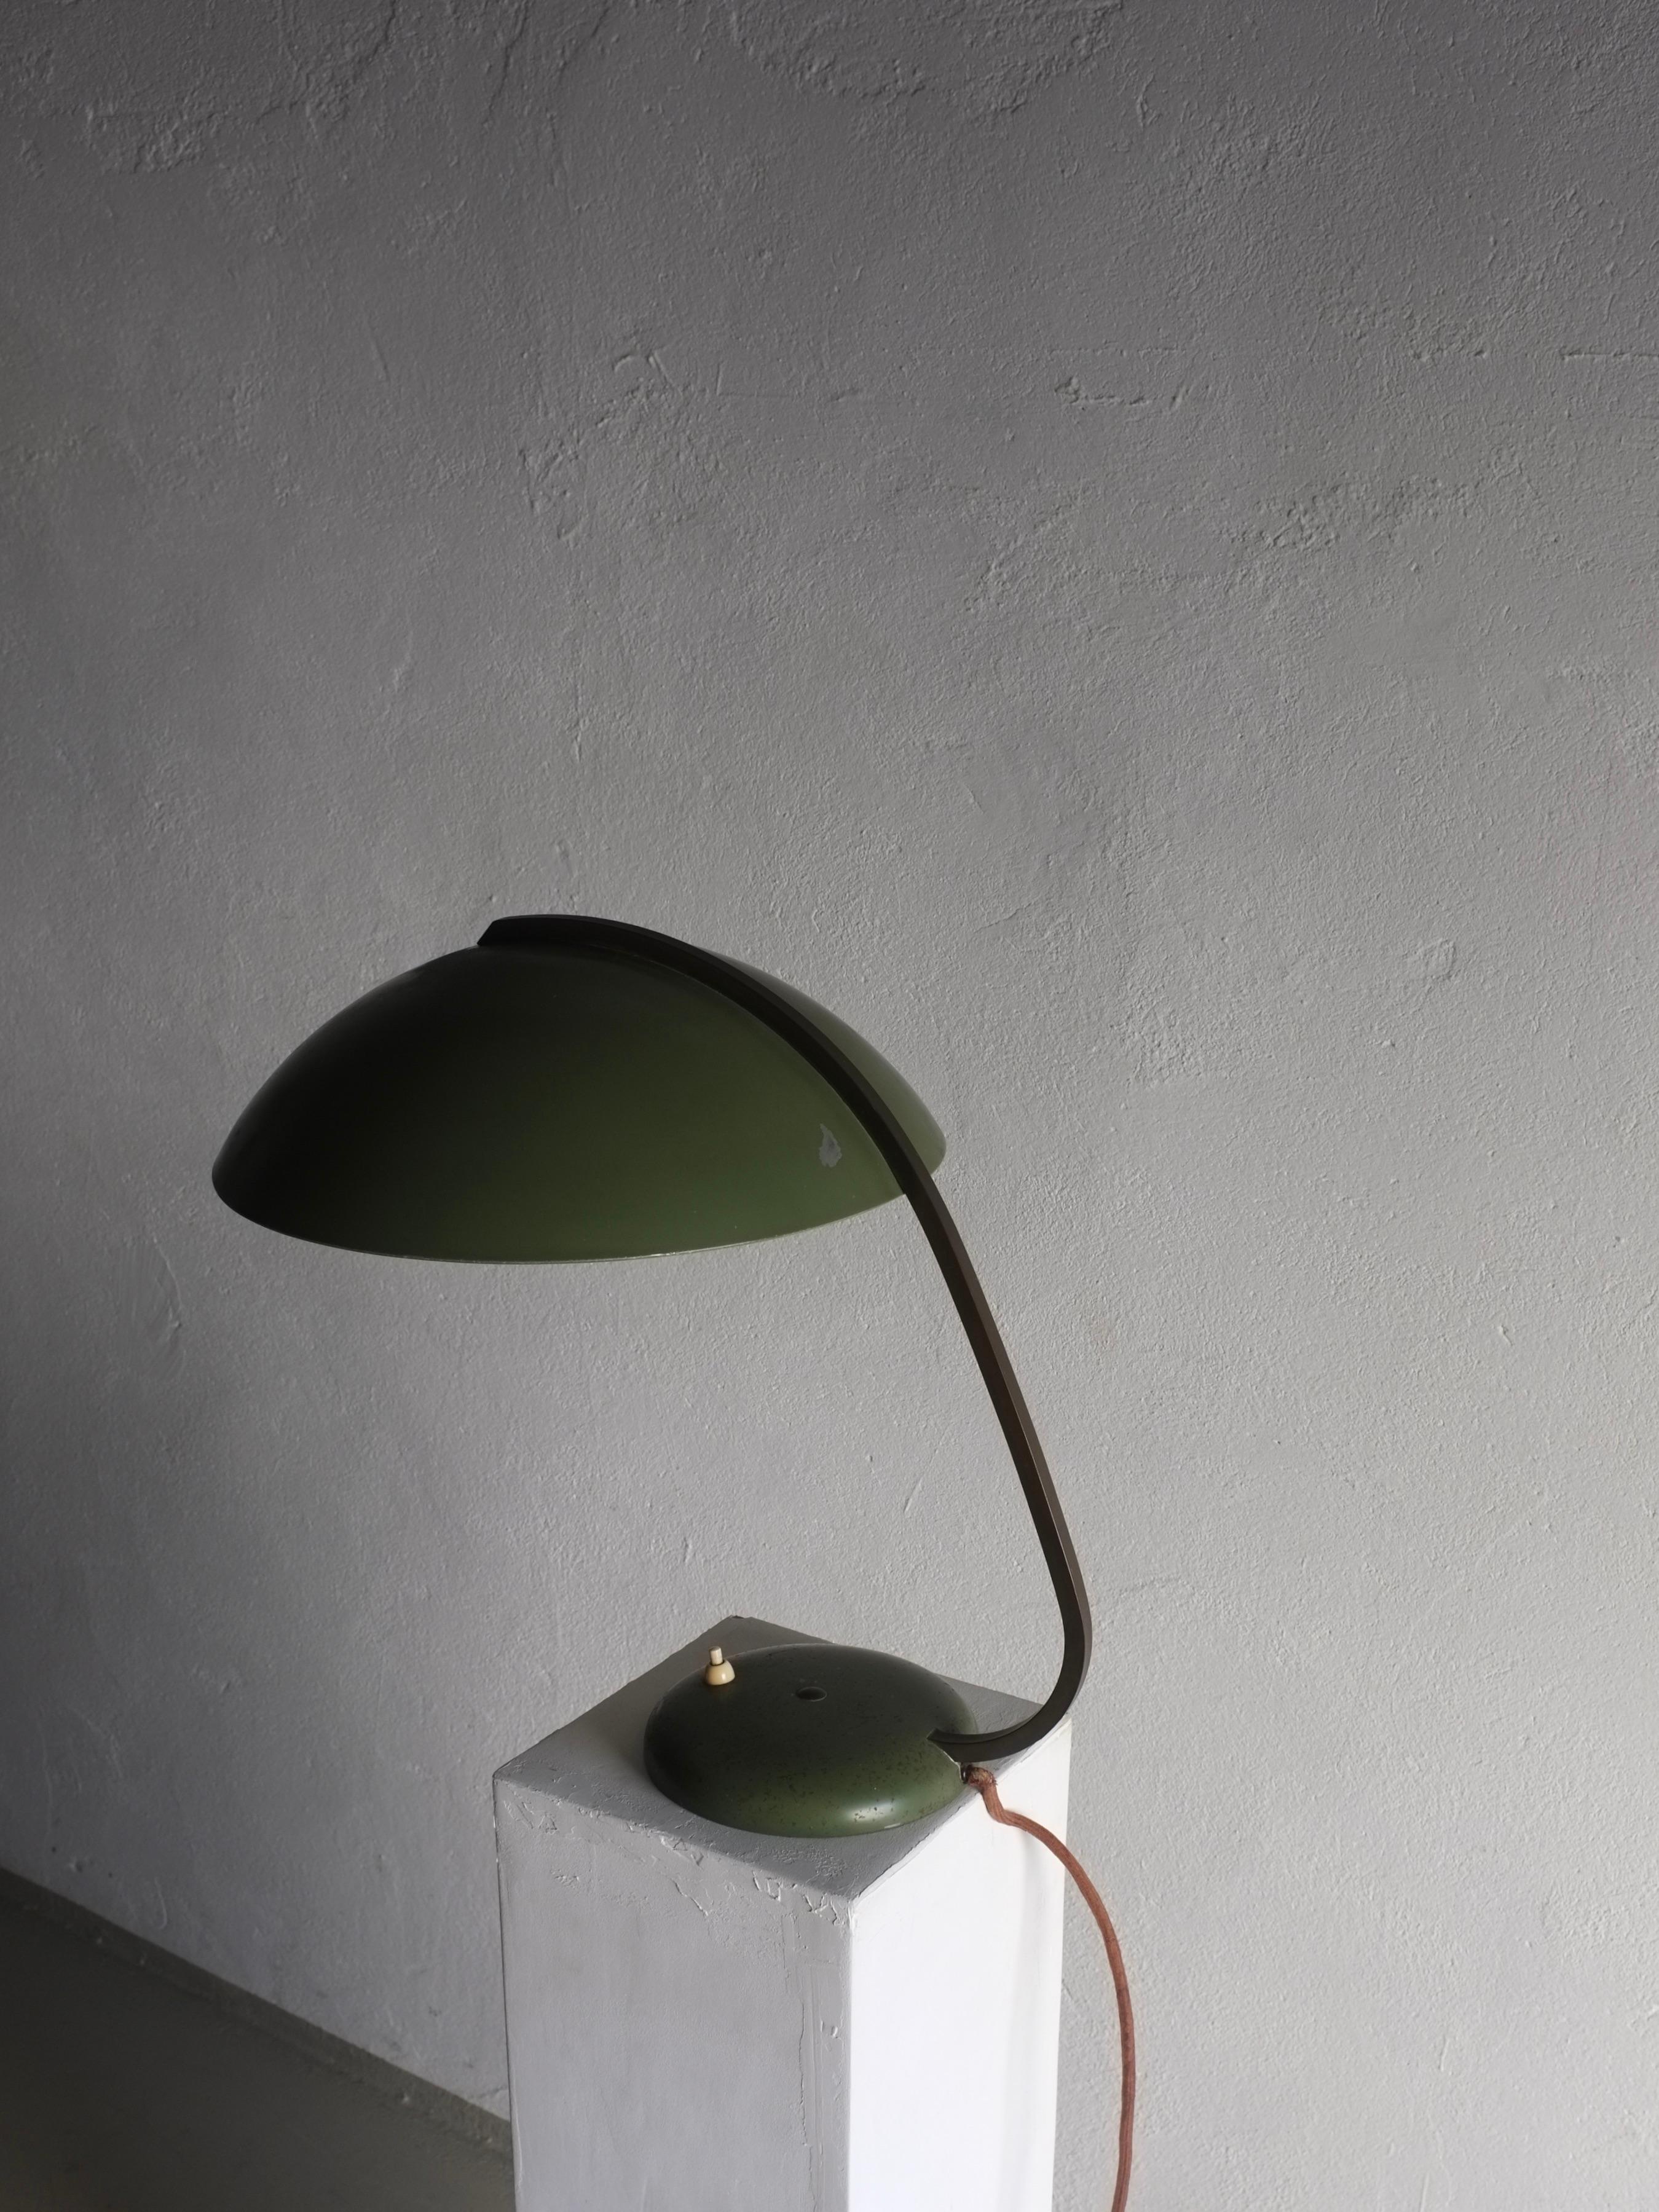 Painted Bauhaus Green Metal Desk Lamp, Germany, 1930s